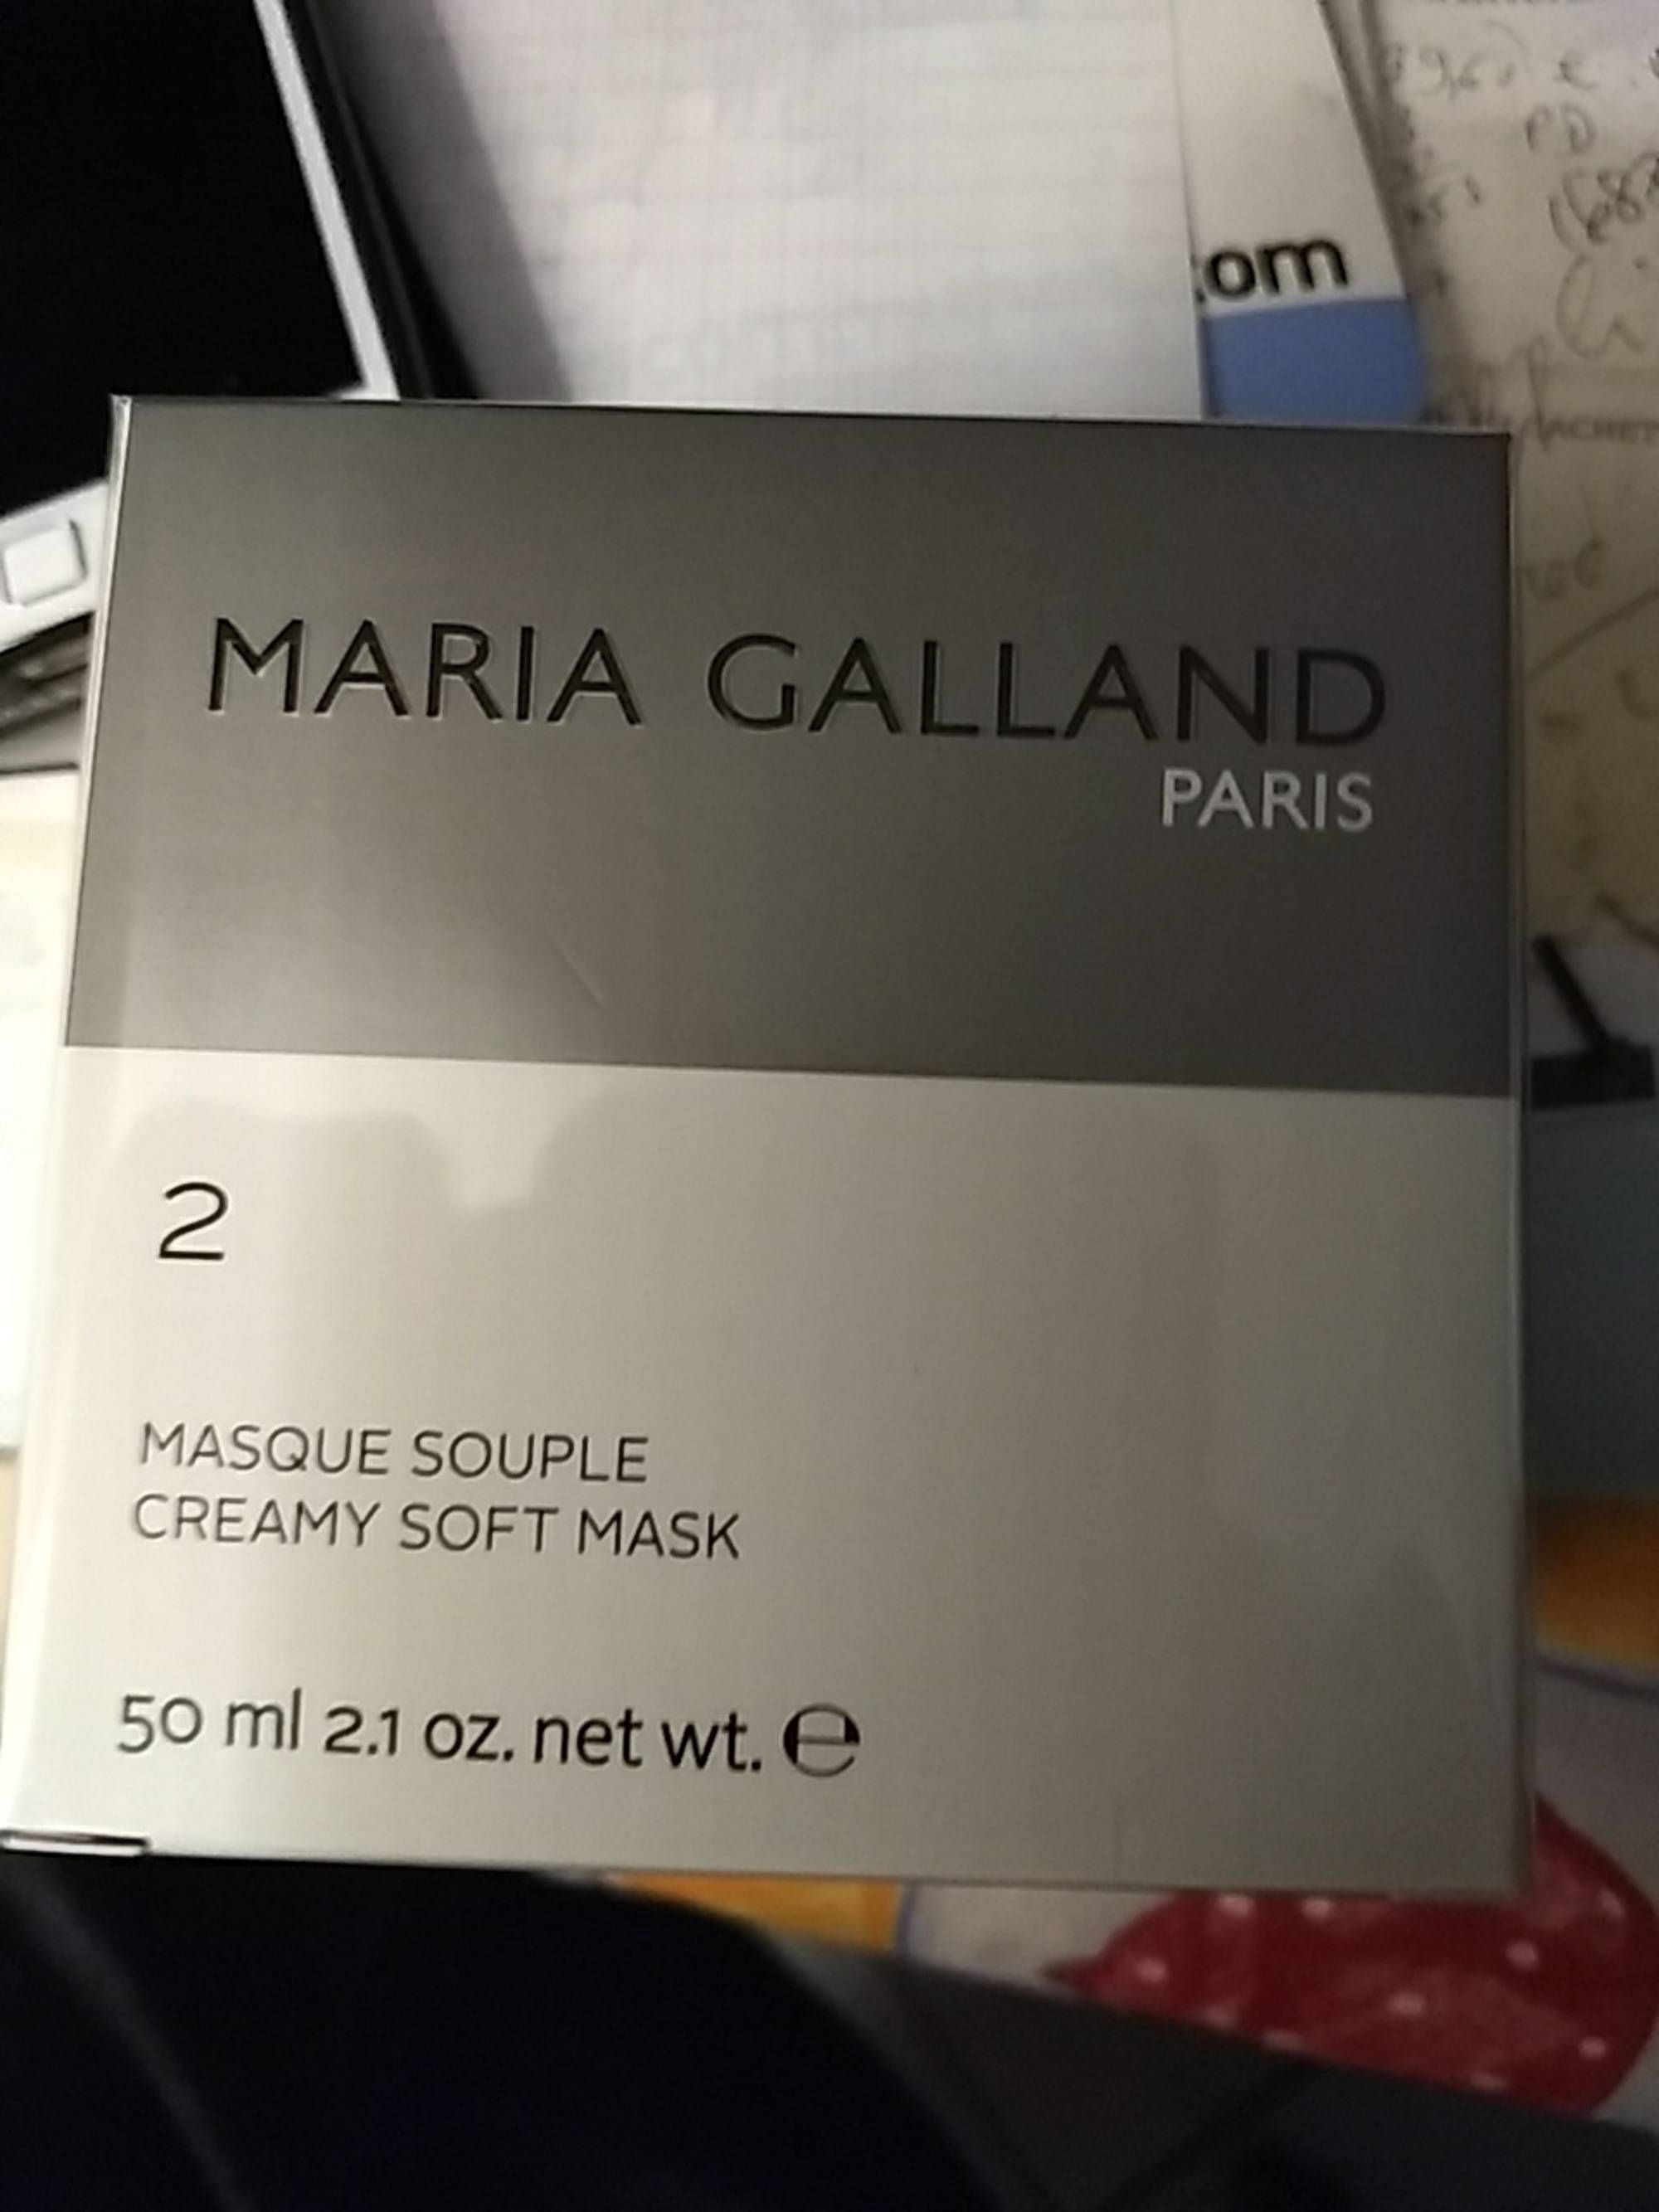 MARIA GALLAND - 2 masque souple